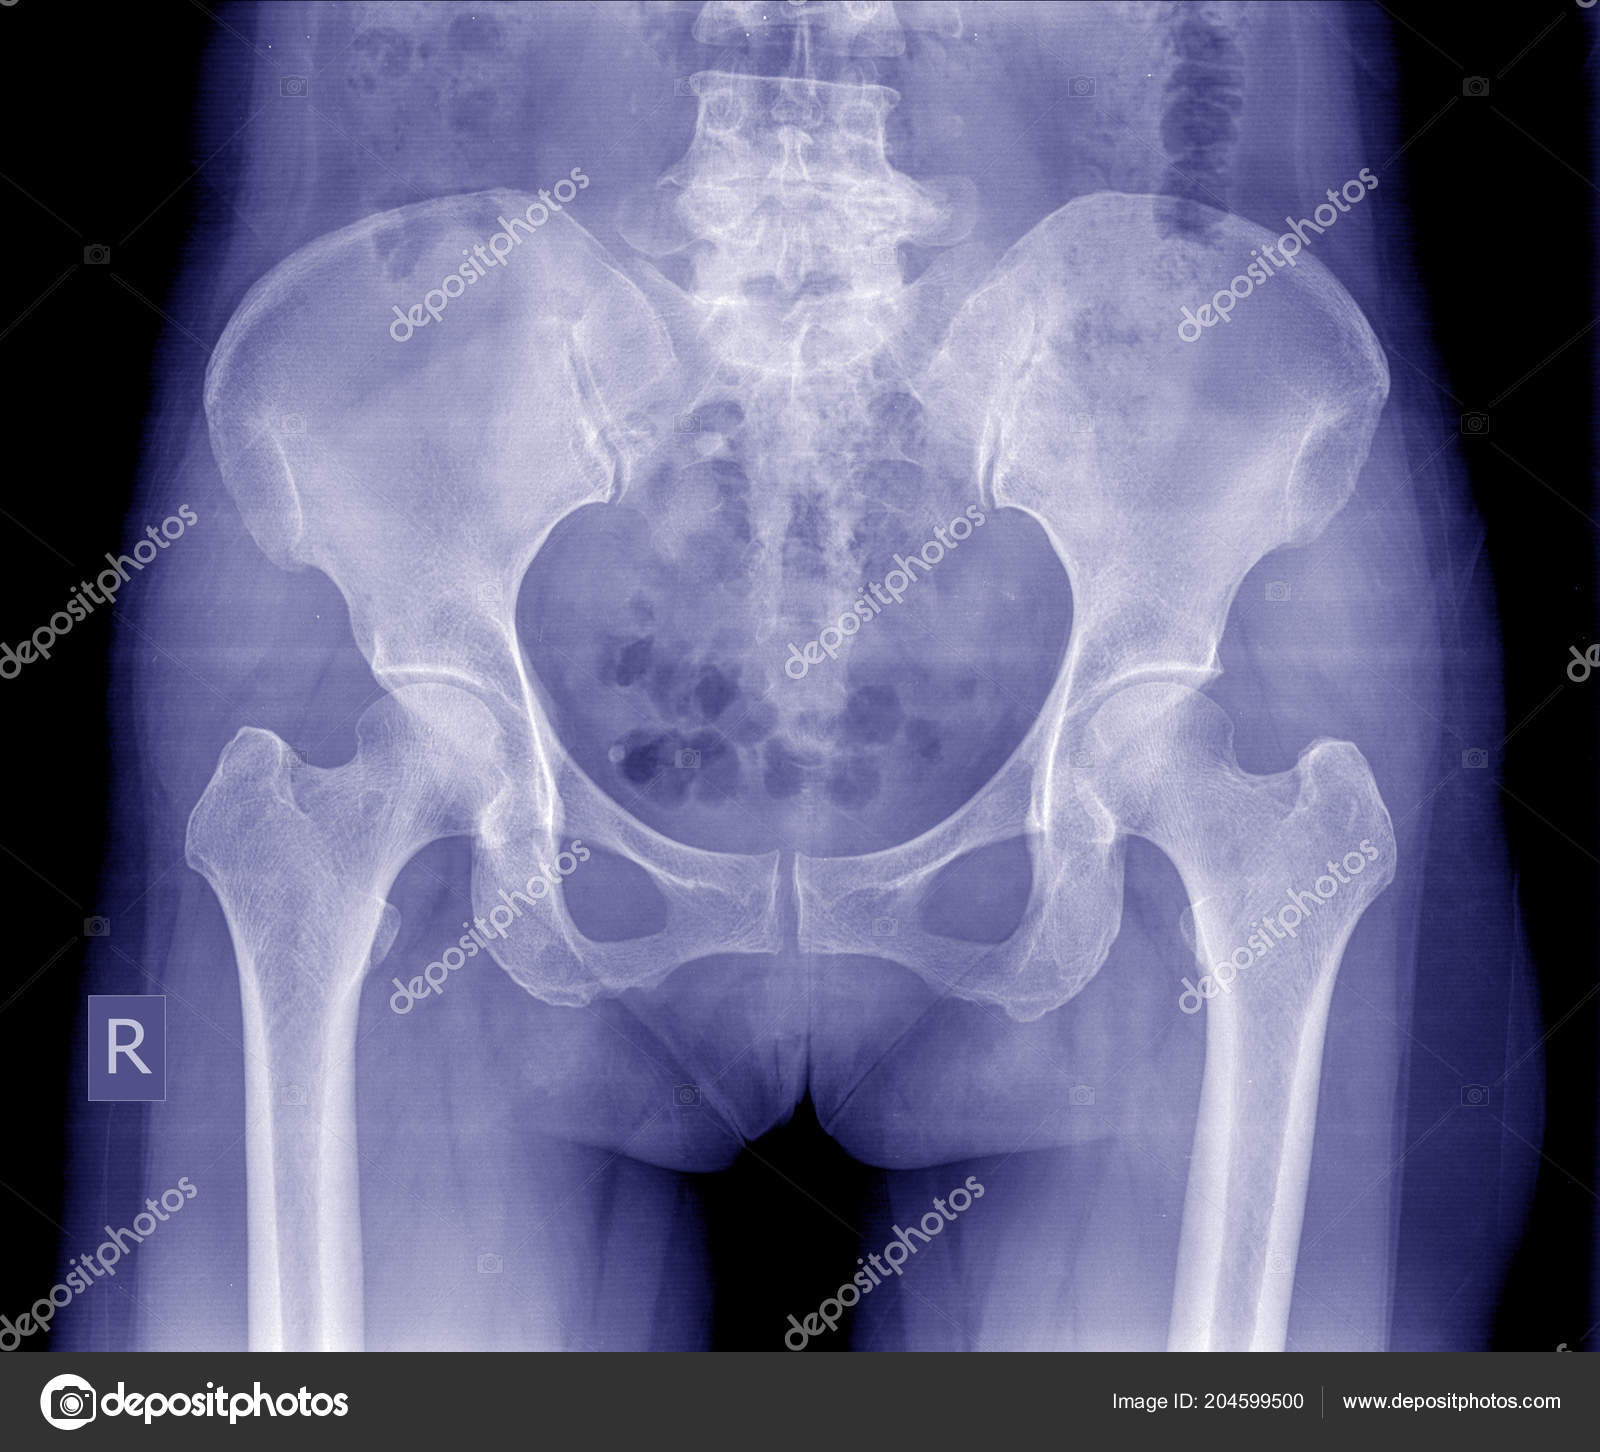 Без видимых патологий. ТБС рентген анатомия. Остеопороз костей таза рентген. Остеопороз тазобедренного сустава рентген. Рентген таза и тазобедренных суставов.